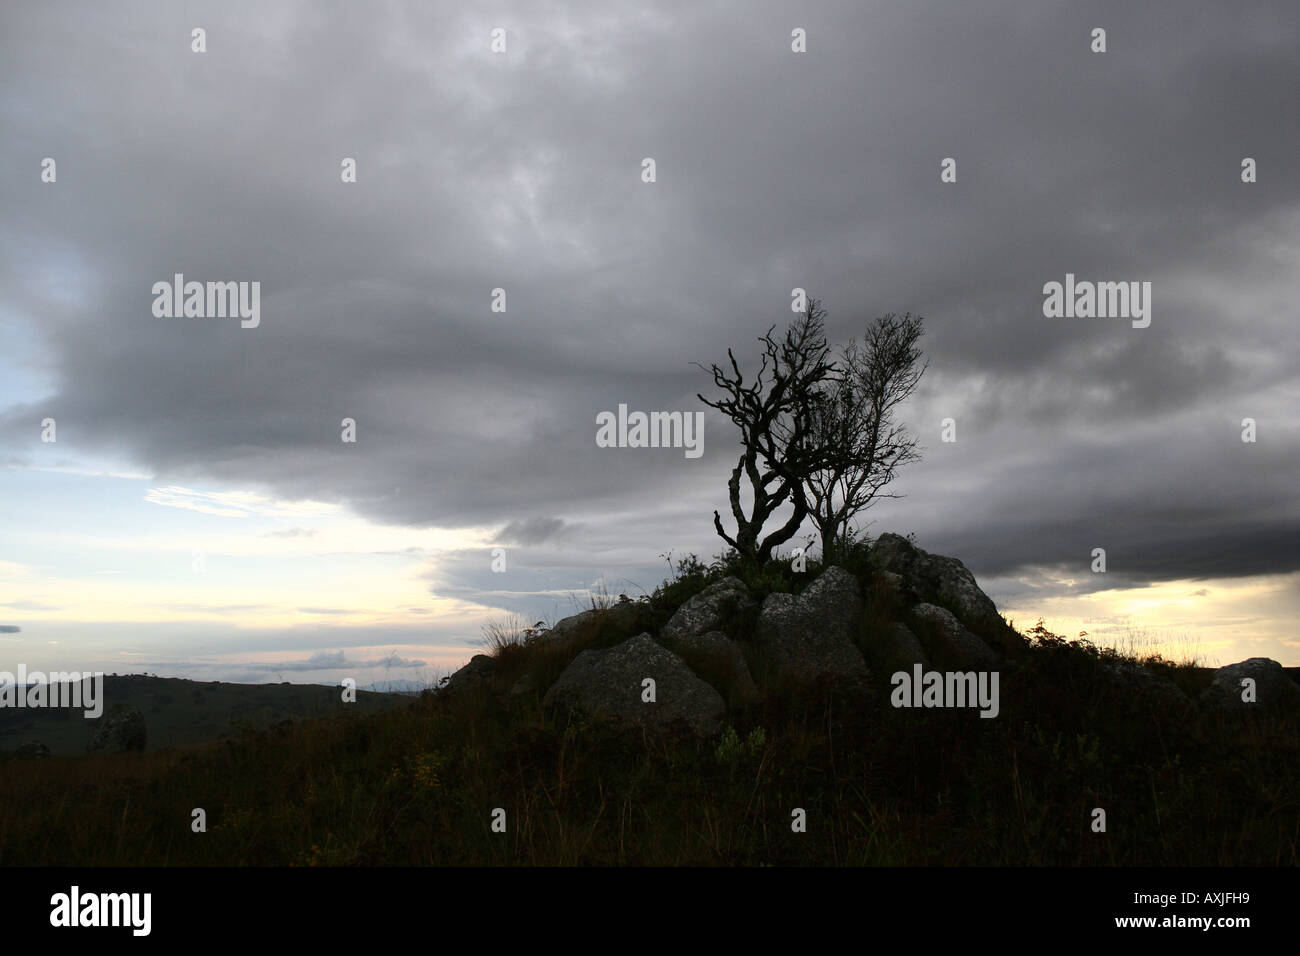 Toter Baum gegen Dramatis Gewitterhimmel Stockfoto